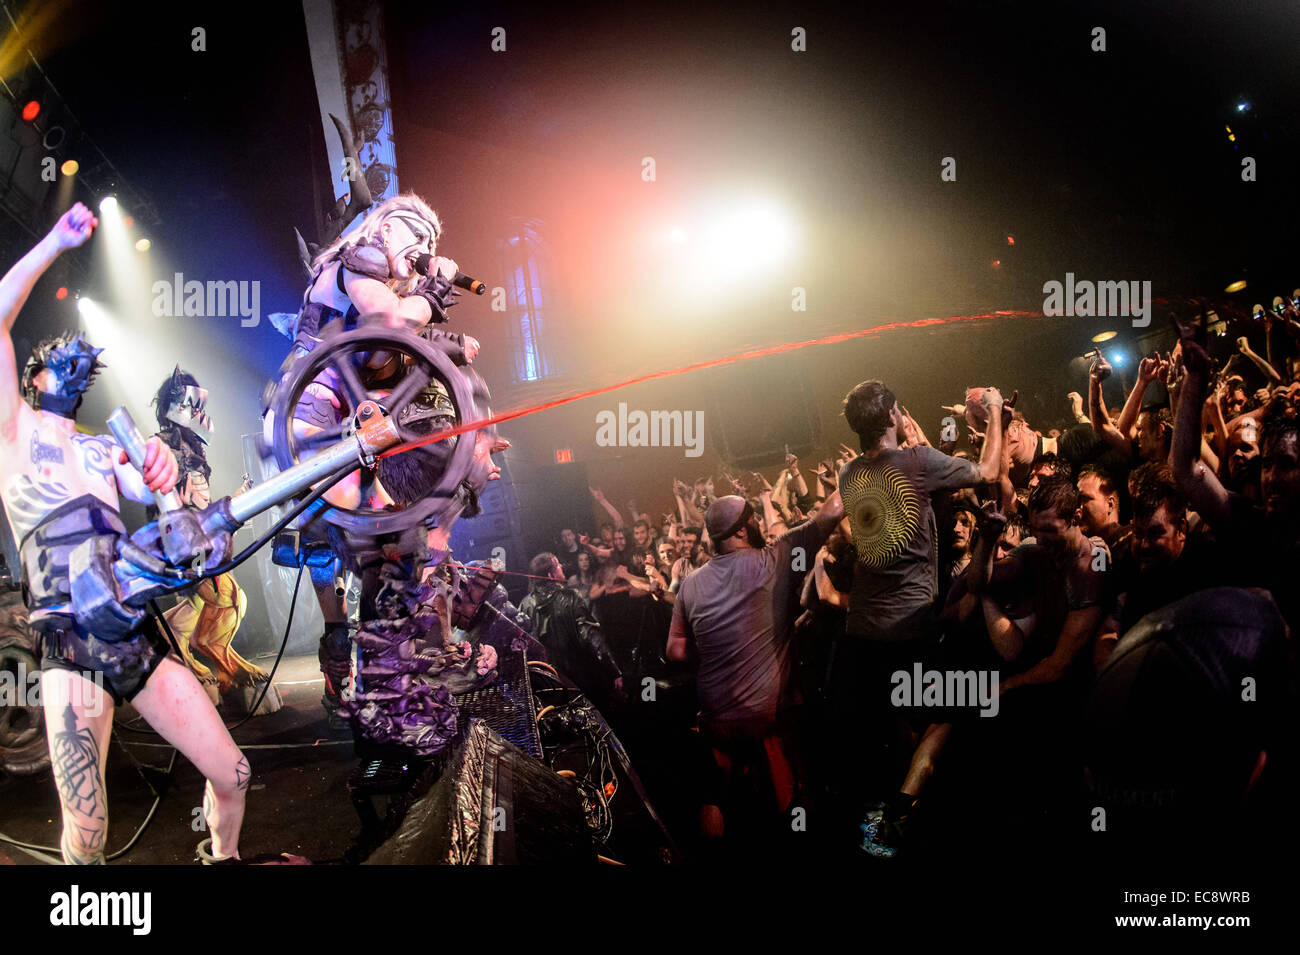 Toronto, Ontario, Canada. 10th Dec, 2014. American thrash metal band GWAR performed sold out show at The Opera House in Toronto. Band members: MICHAEL BISHOP, MIKE DERKS, BRAD ROBERTS, BOB GORMAN, JAMISON LAND, BRENT PURGASON, KIM DYLLA, MATT MAGUIRE © Igor Vidyashev/ZUMA Wire/Alamy Live News Stock Photo